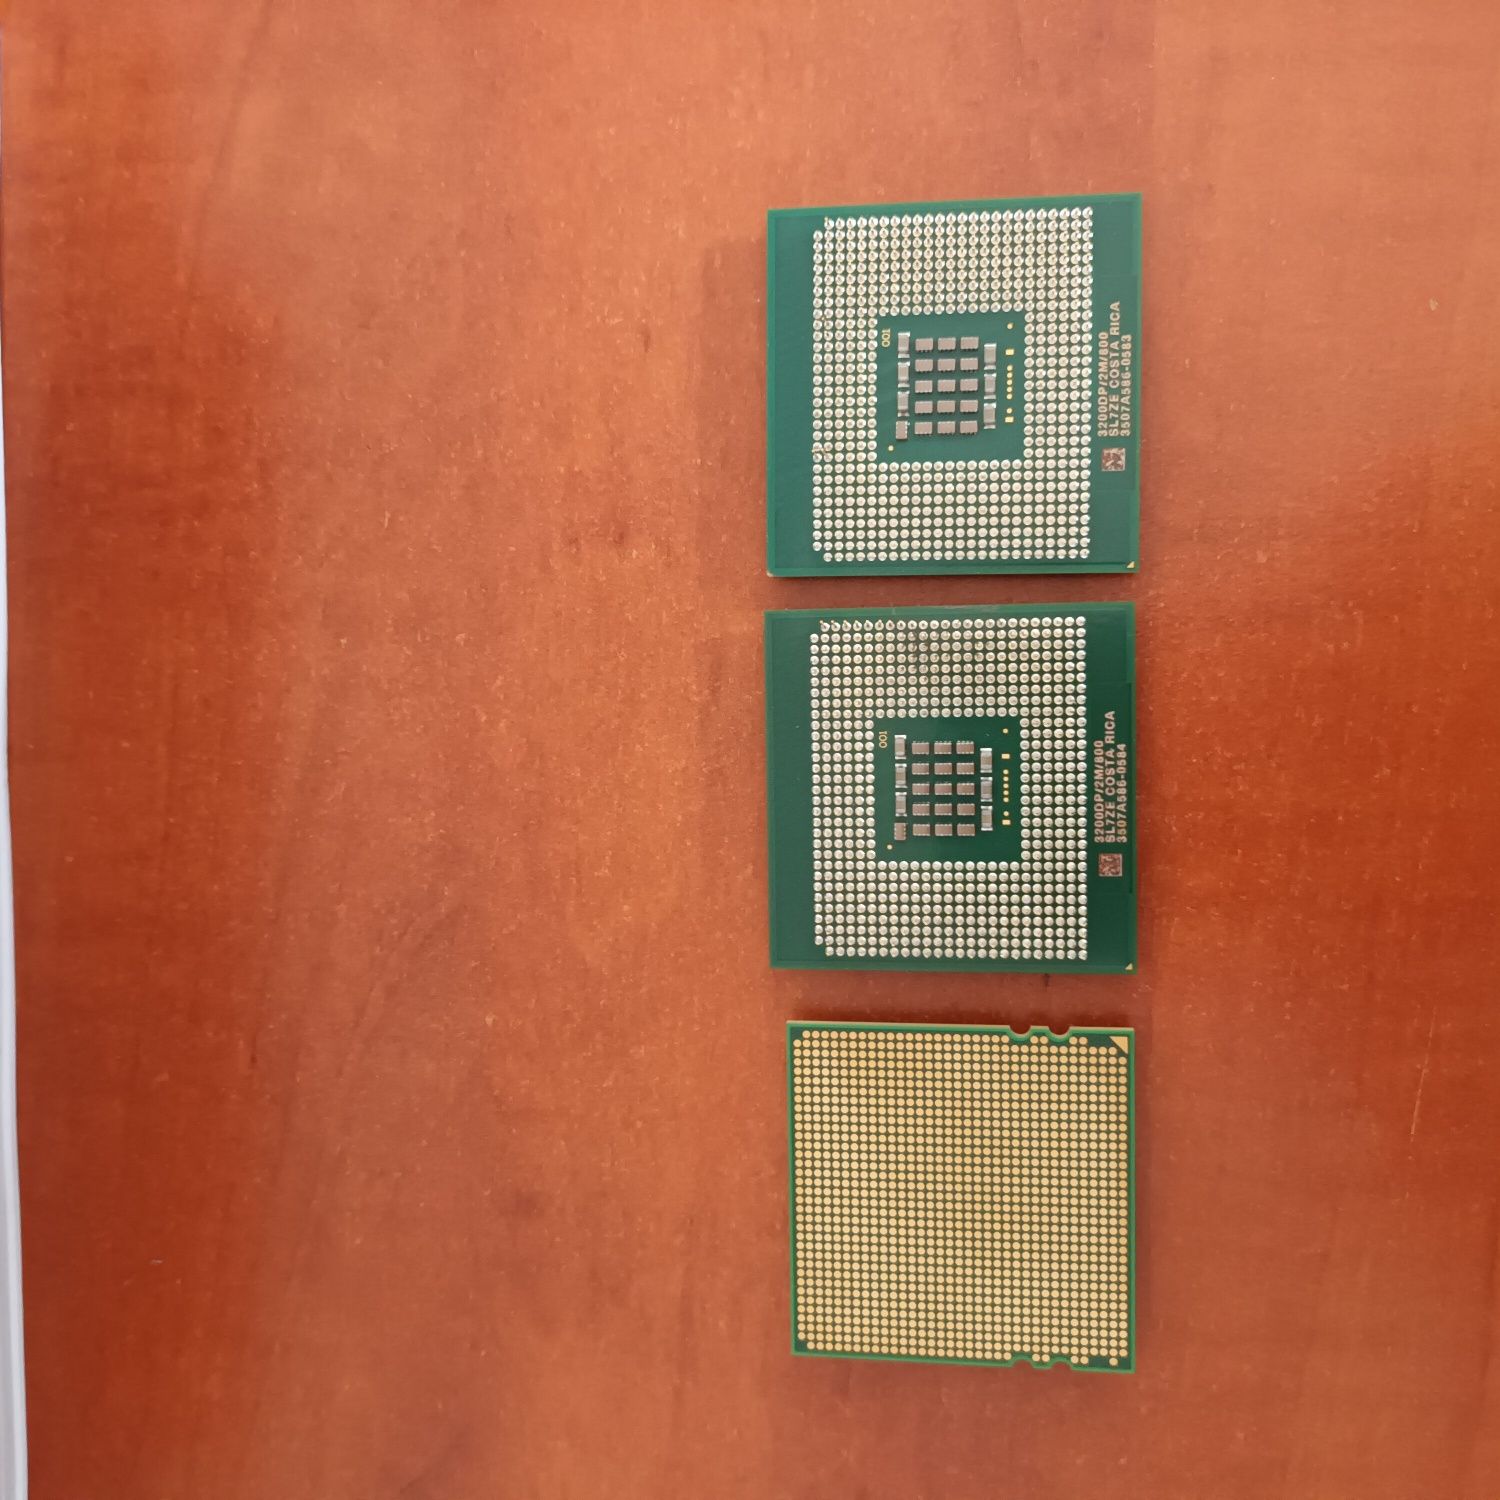 procesor AMD Opteron 2216 + 2 procesoare Xeon 3200 DP